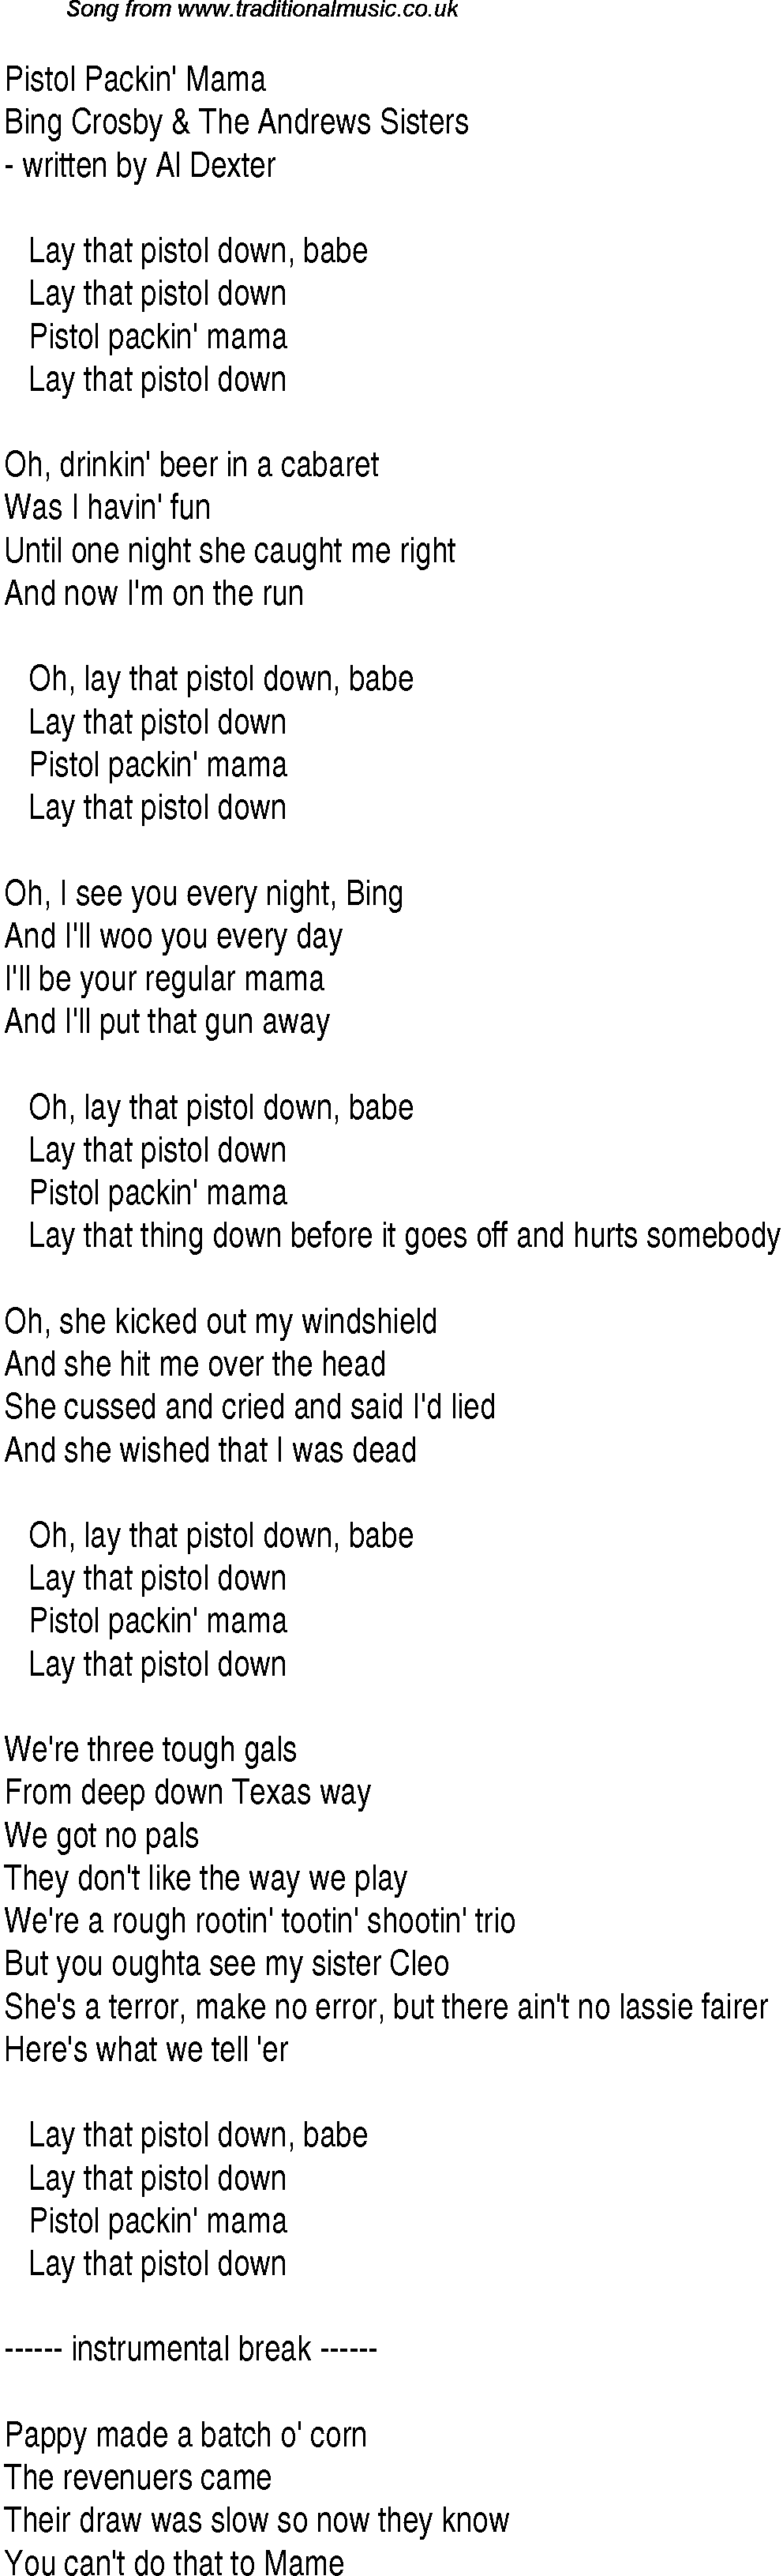 Music charts top songs 1943 - lyrics for Pistol Packin Mamaas